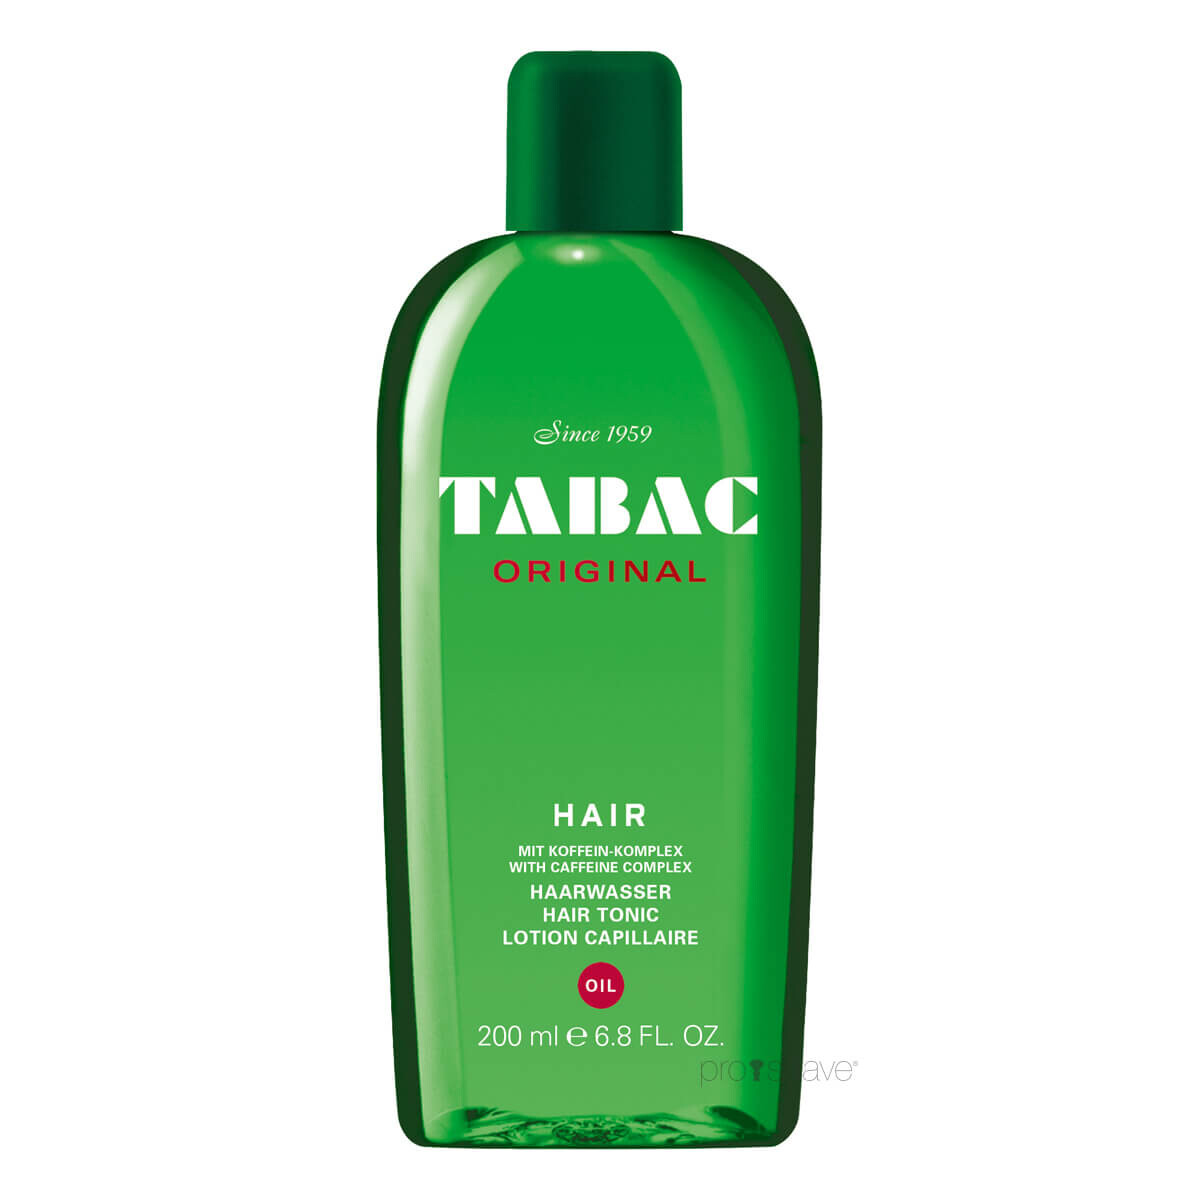 Tabac Hair Lotion, Oil, 200 ml.